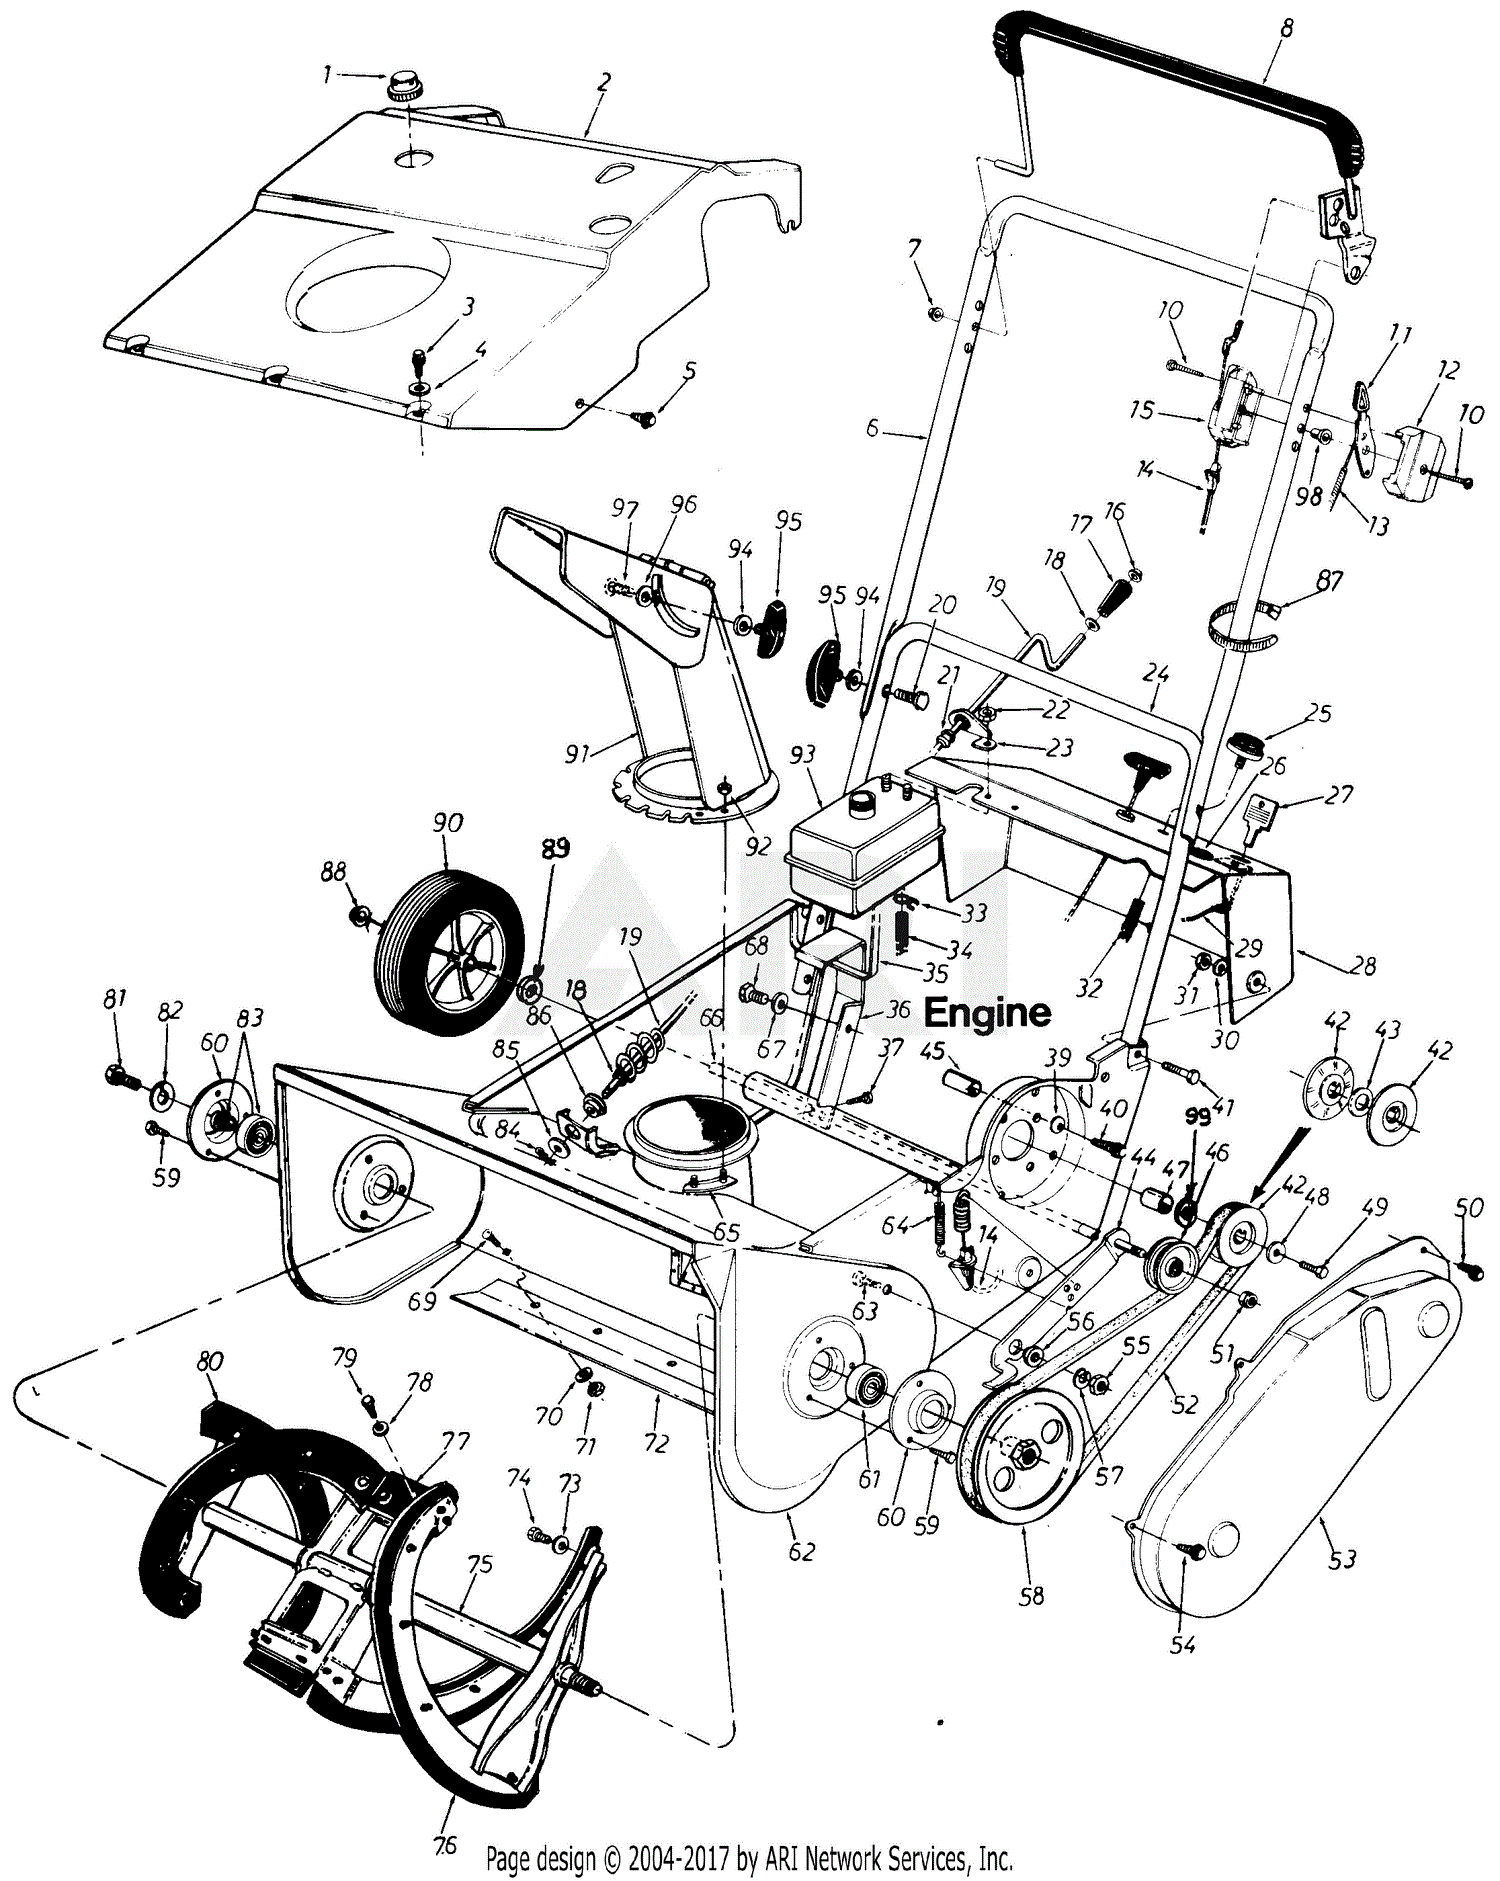 1979 mtd snowblower parts diagram